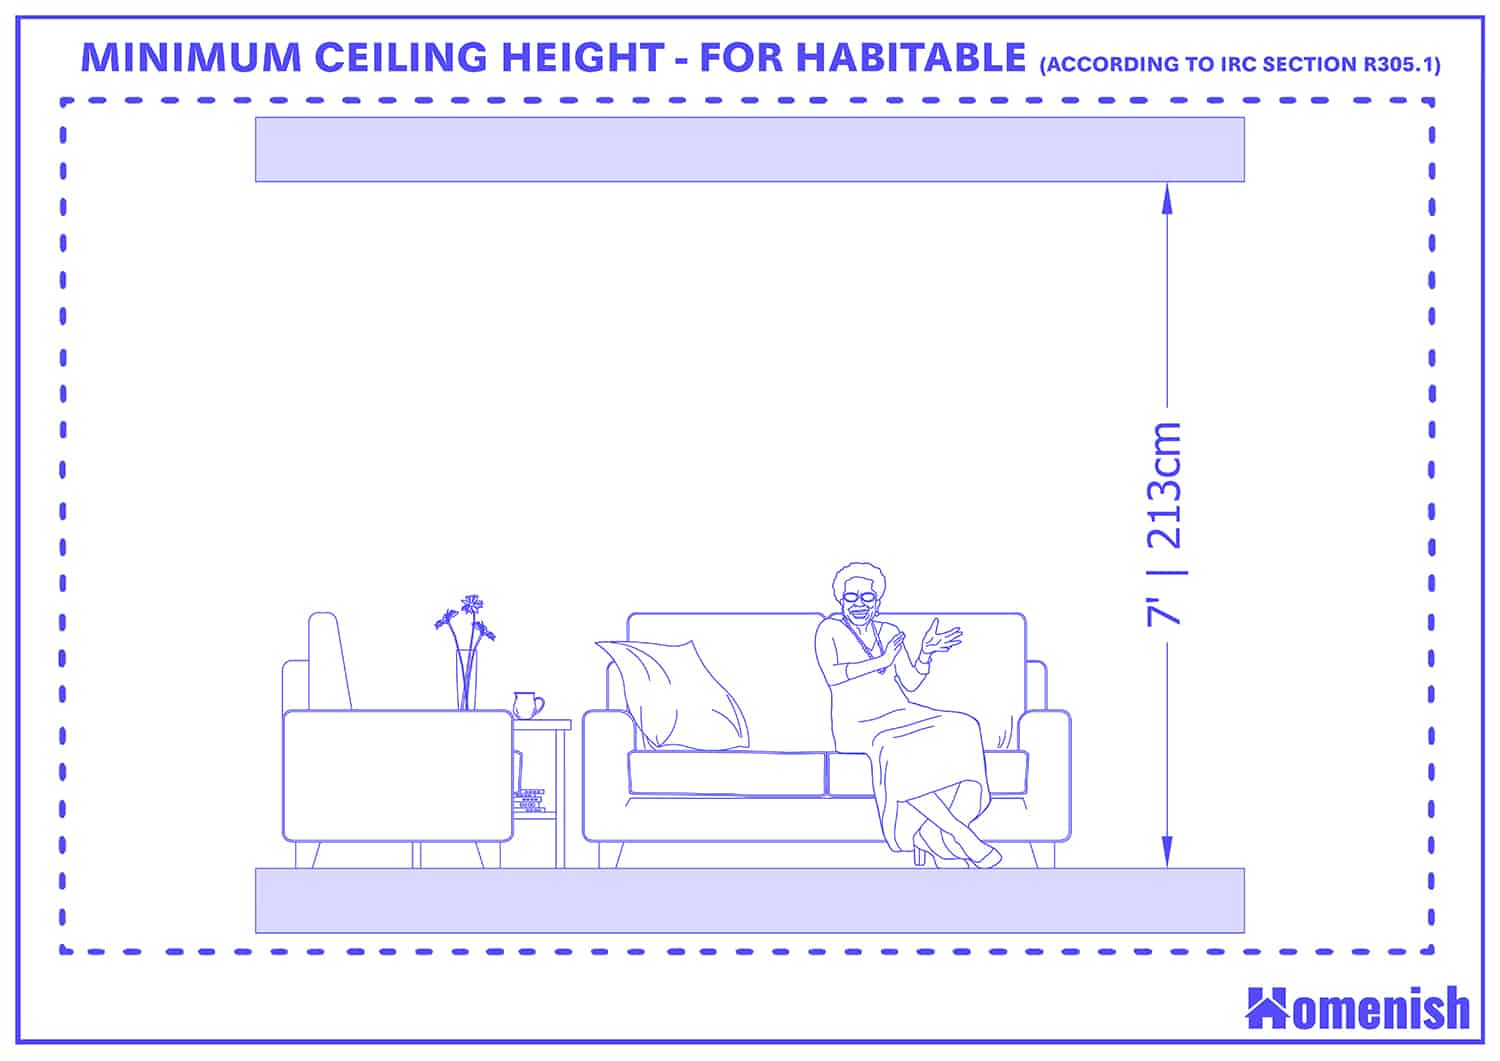 Minimum Ceiling Height for Habitable Spaces